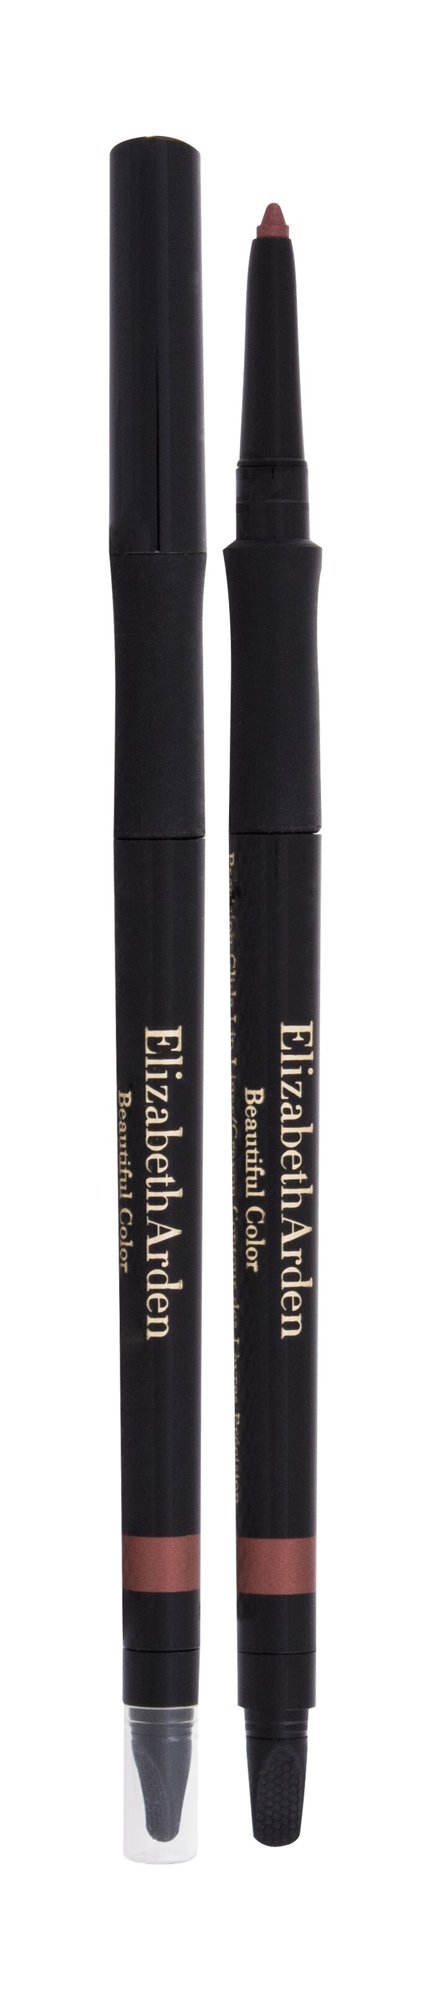 Elizabeth Arden Beautiful Color Precision Glide 0,35g lūpų pieštukas